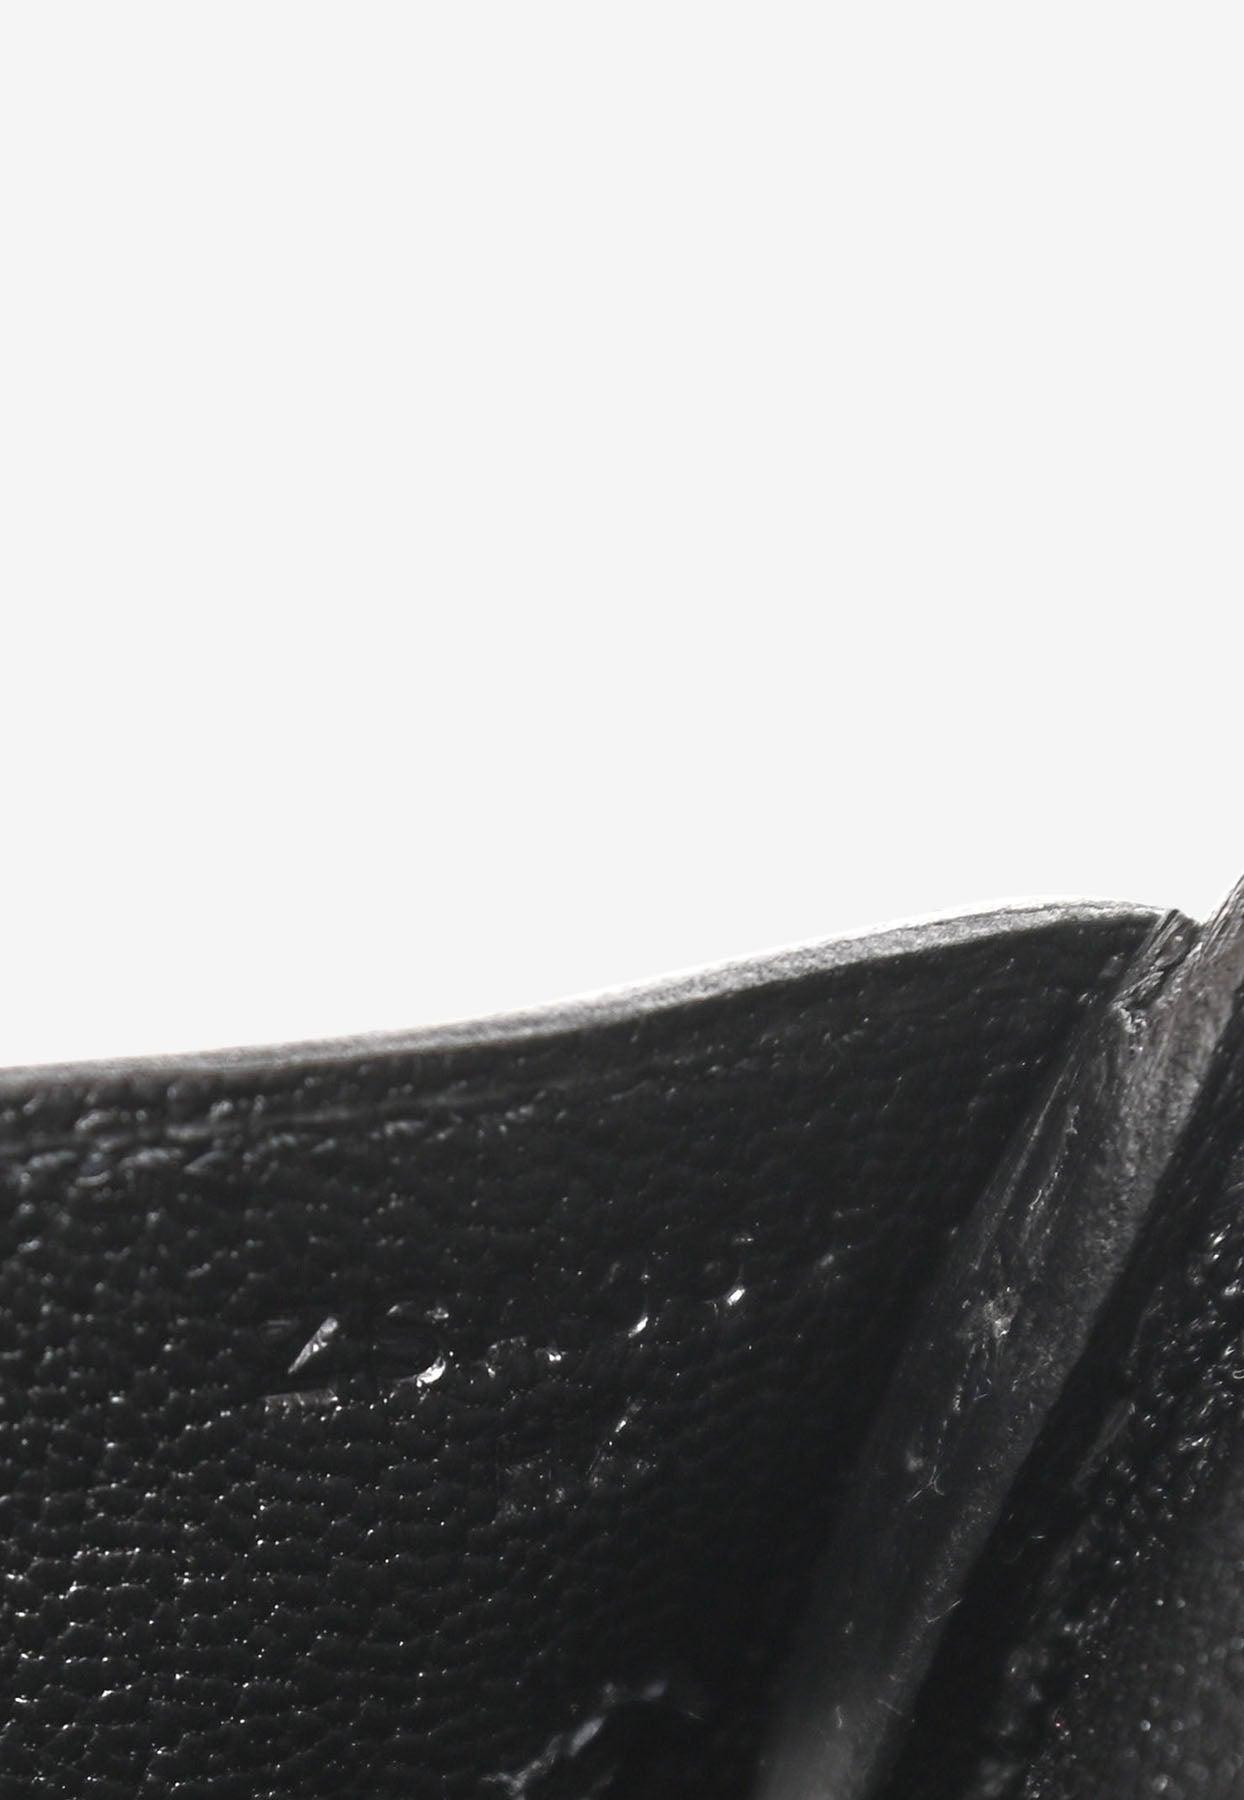 Hermès Birkin 25 Black Ostrich Rose Gold Hardware - 2021, Z – ZAK